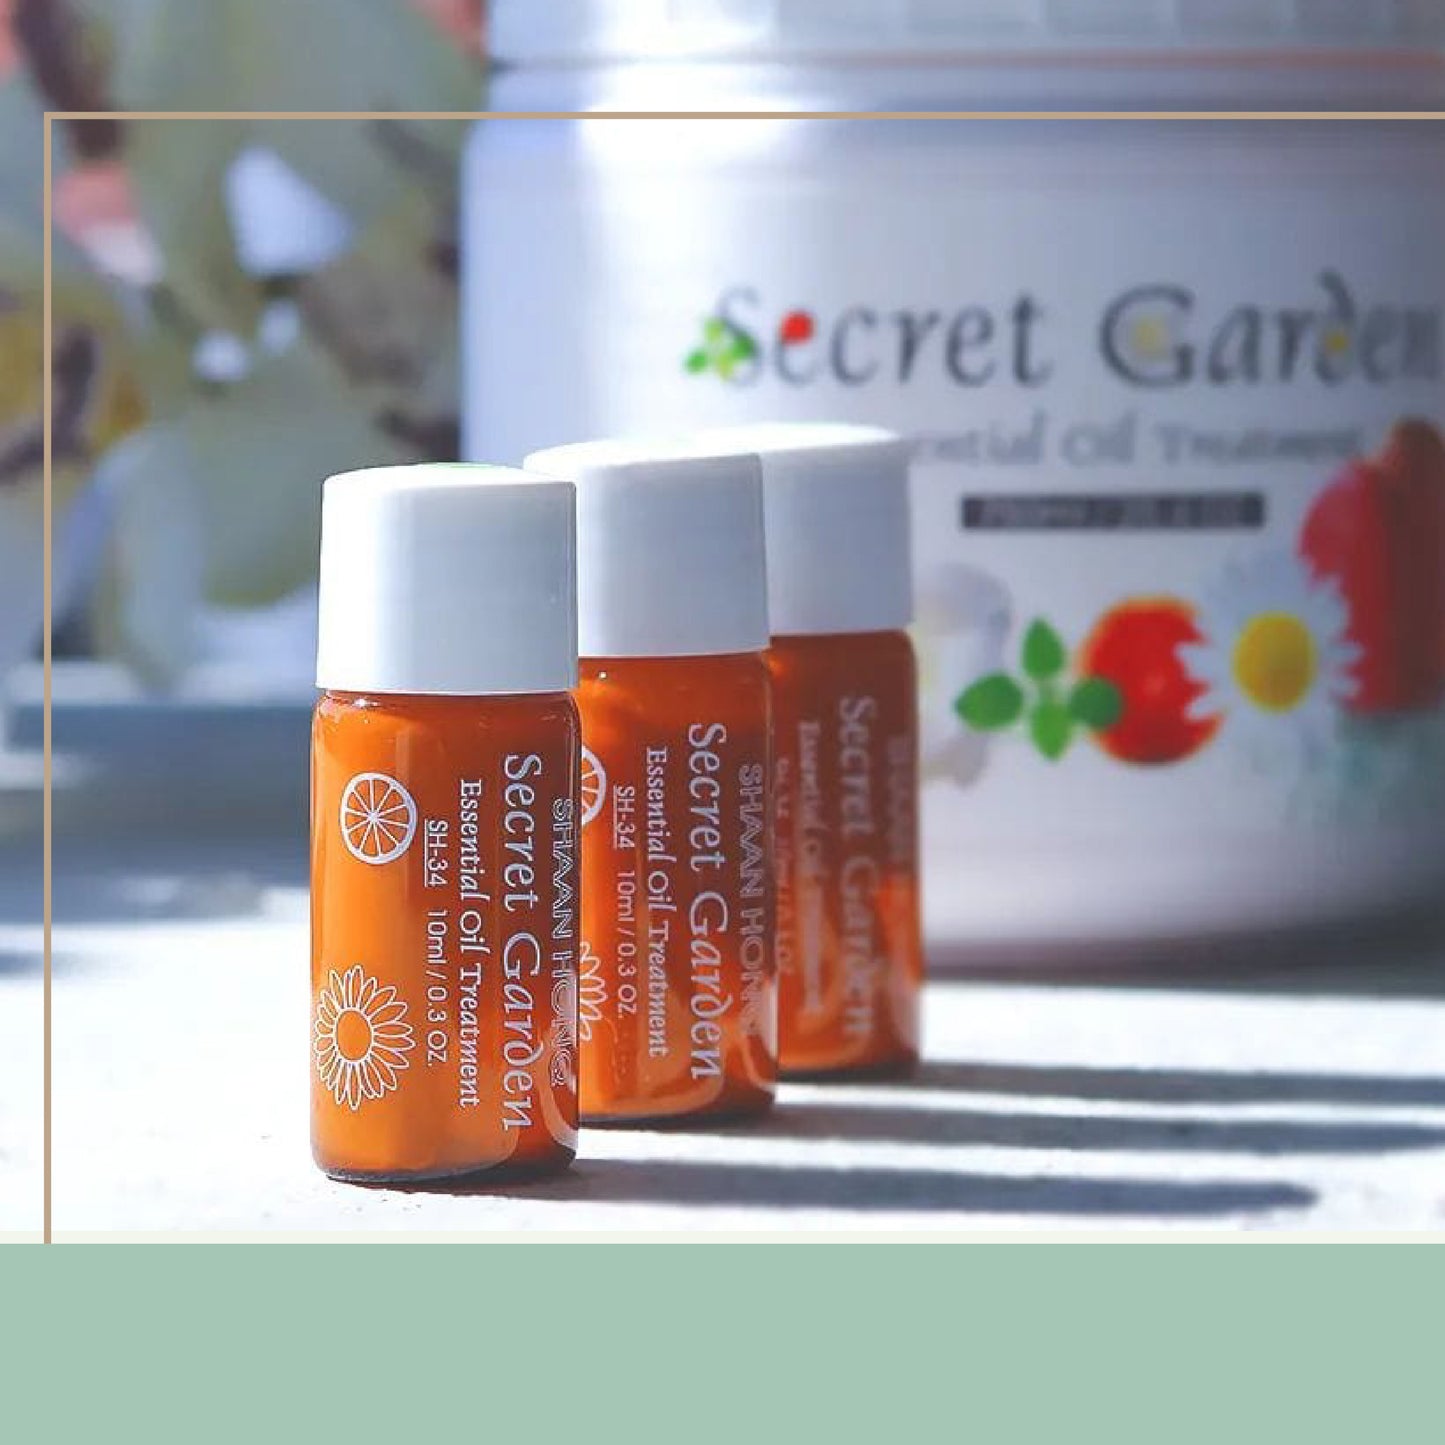 Secret Garden_Essential Oil Treatment